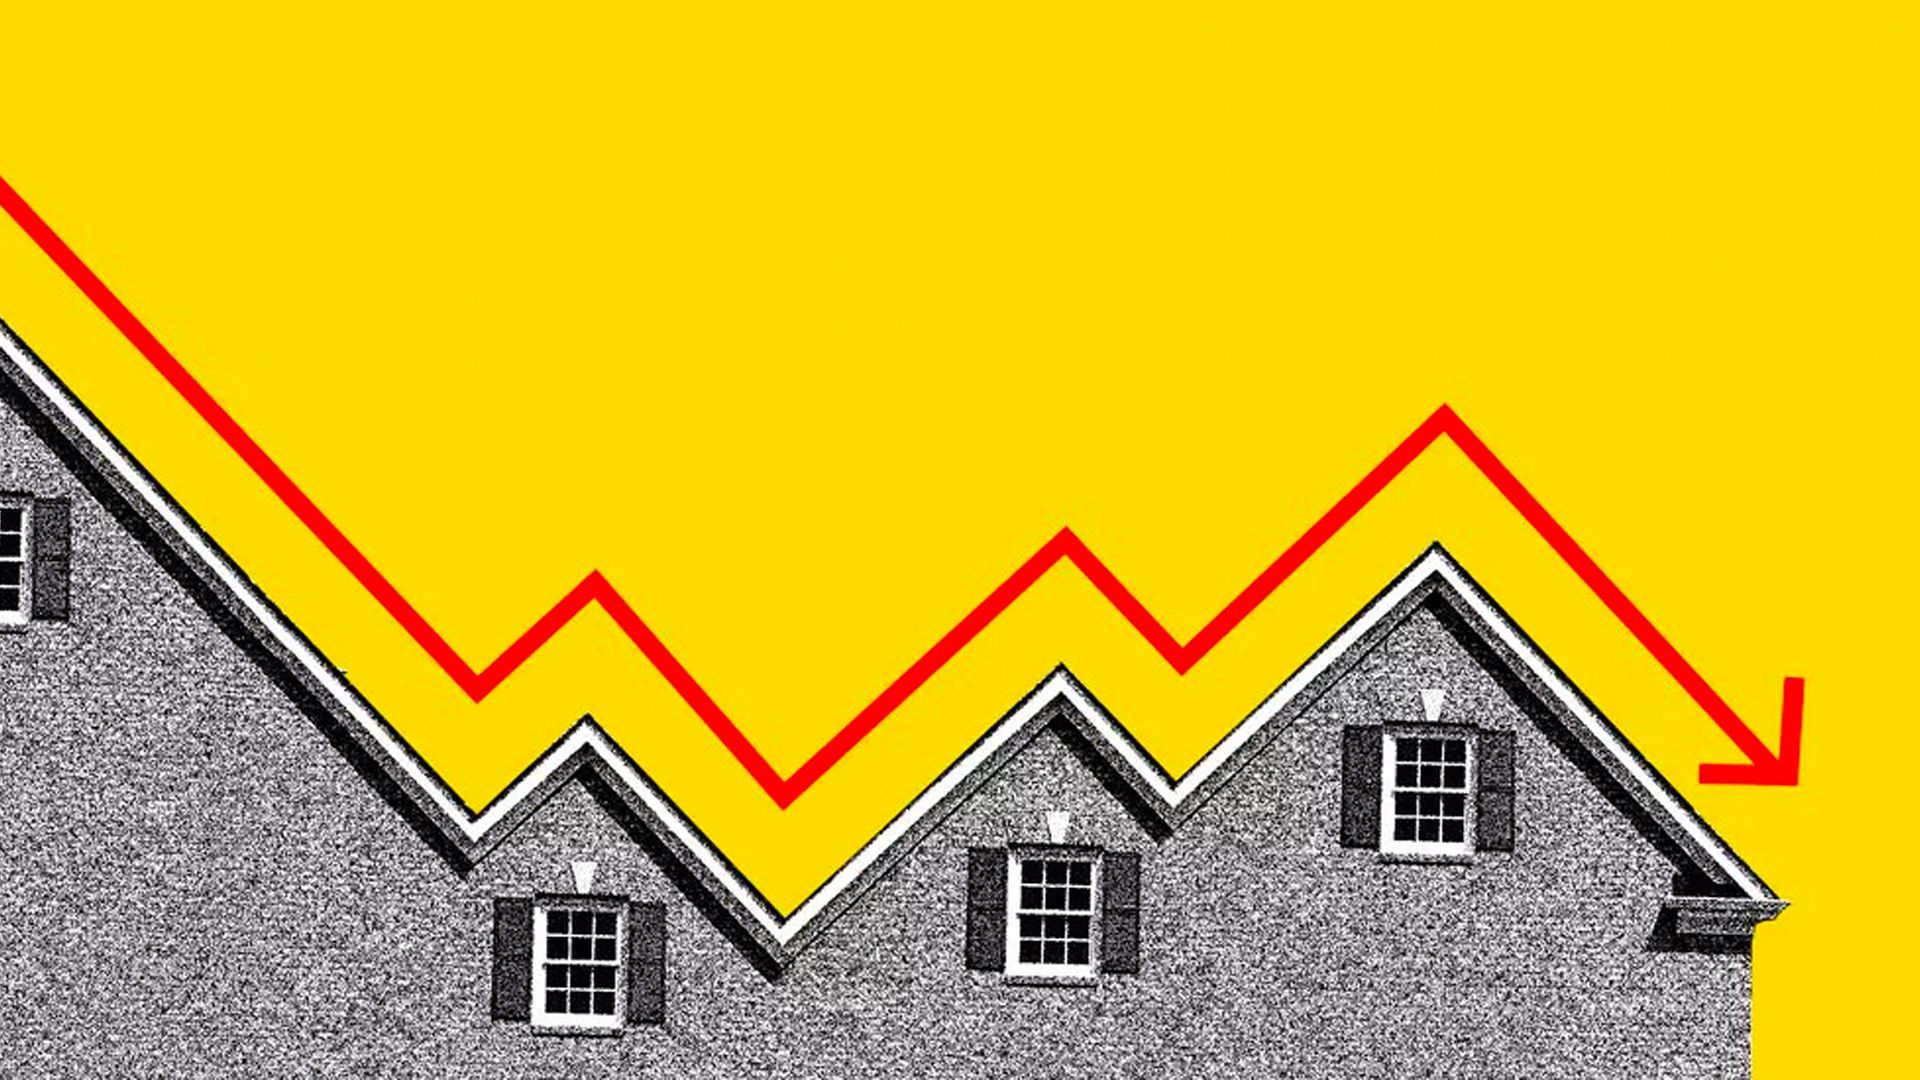 Illustration of a downward trend line over a house